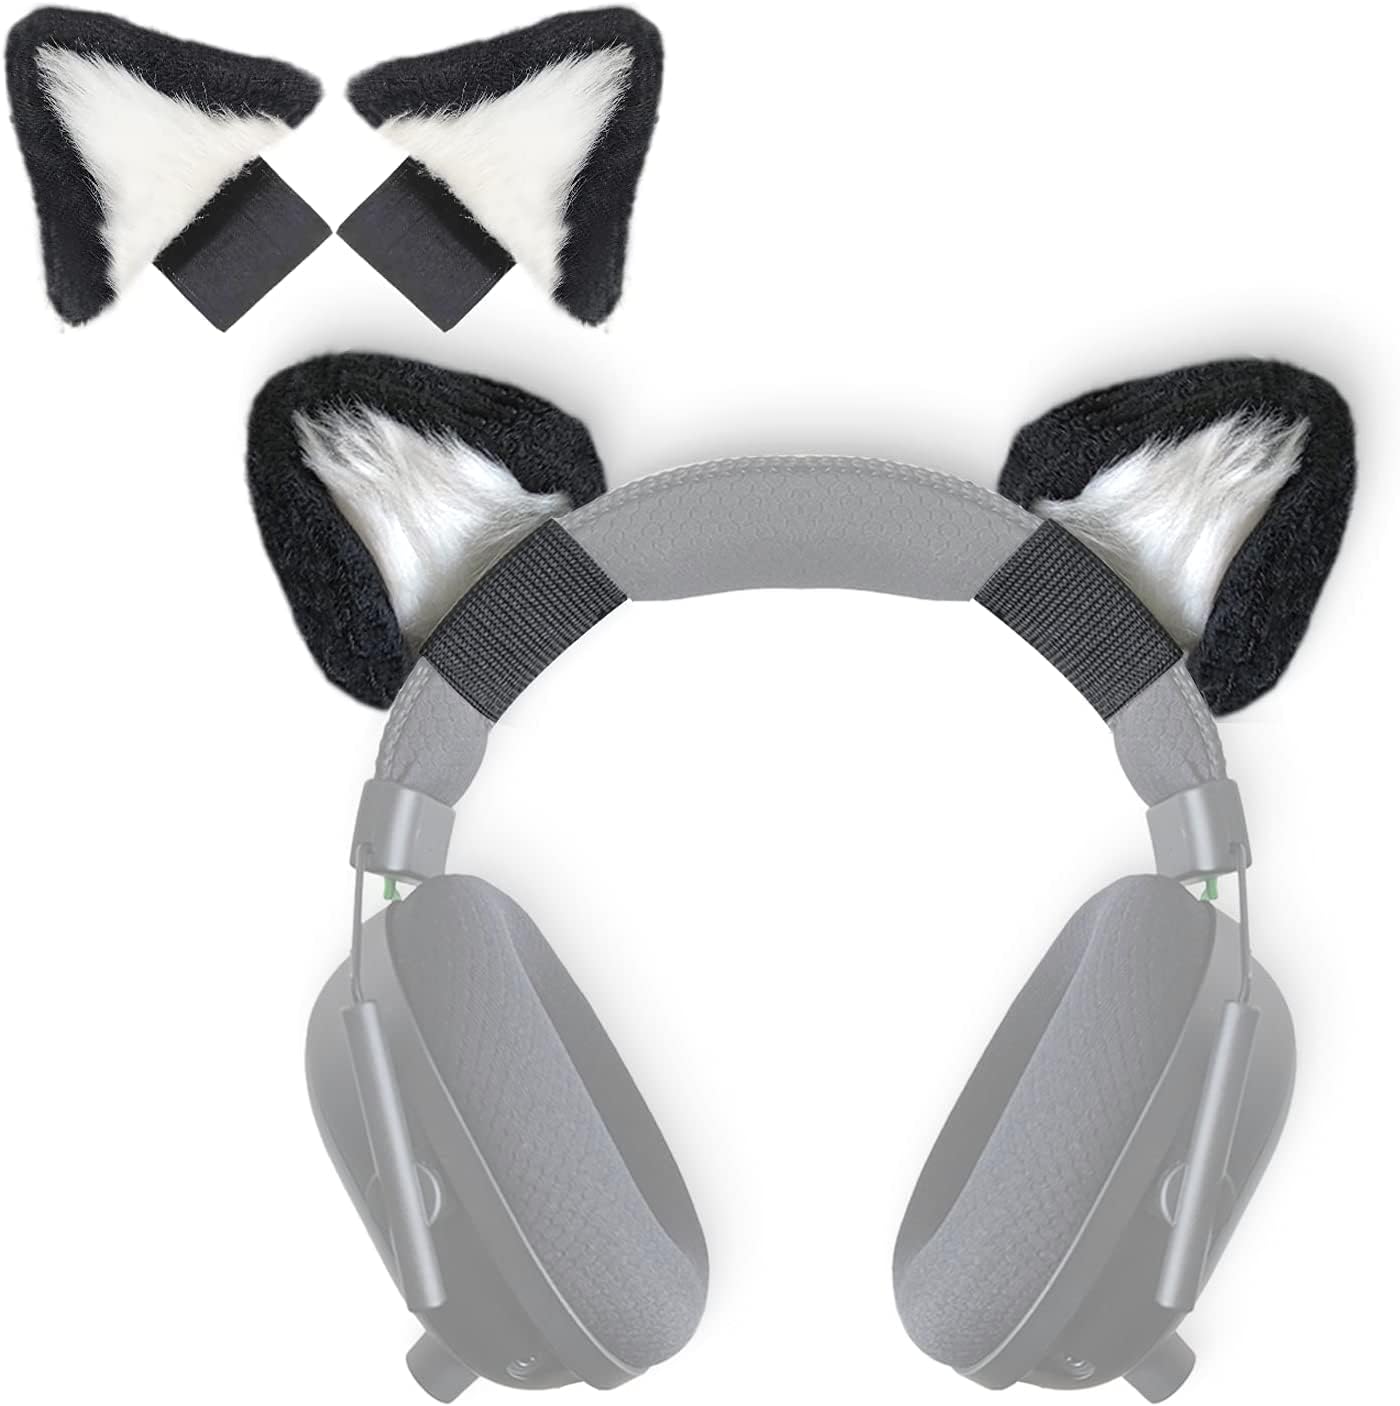 RUKUHOT Cute Cat Ears Headphone Attachment,Adjustable Design Fit for Logitech G PRO HypreX Cloud/Cloud Flight Headphones and More,Cosplay Kitten Ears,(Headphones not Included), Black & White